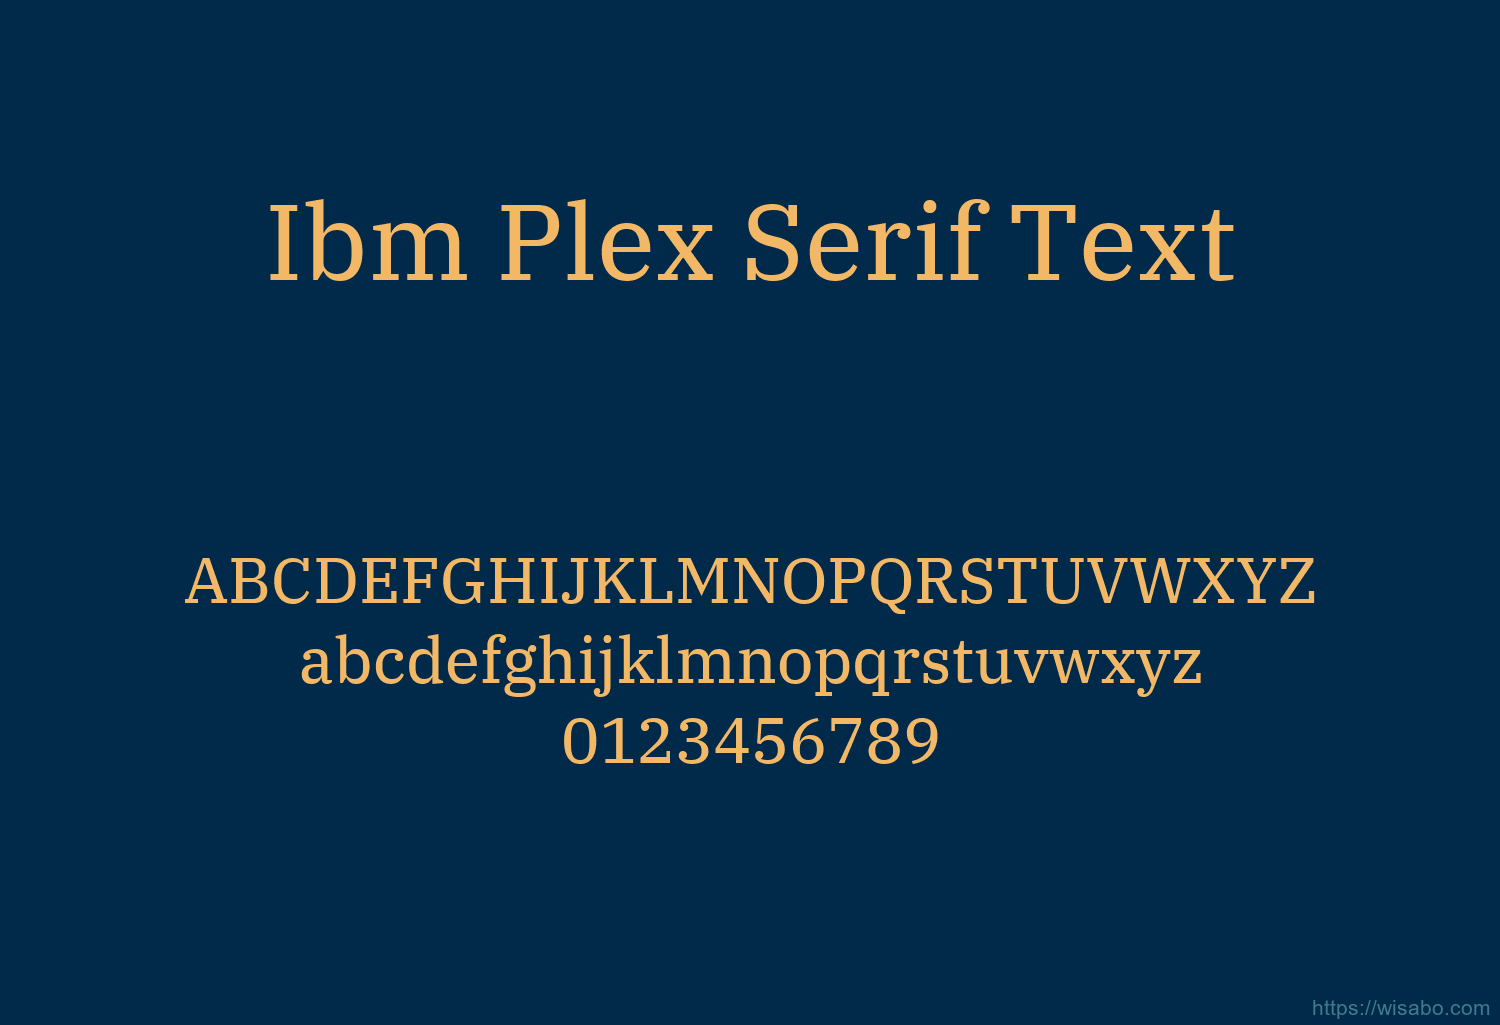 Ibm Plex Serif Text